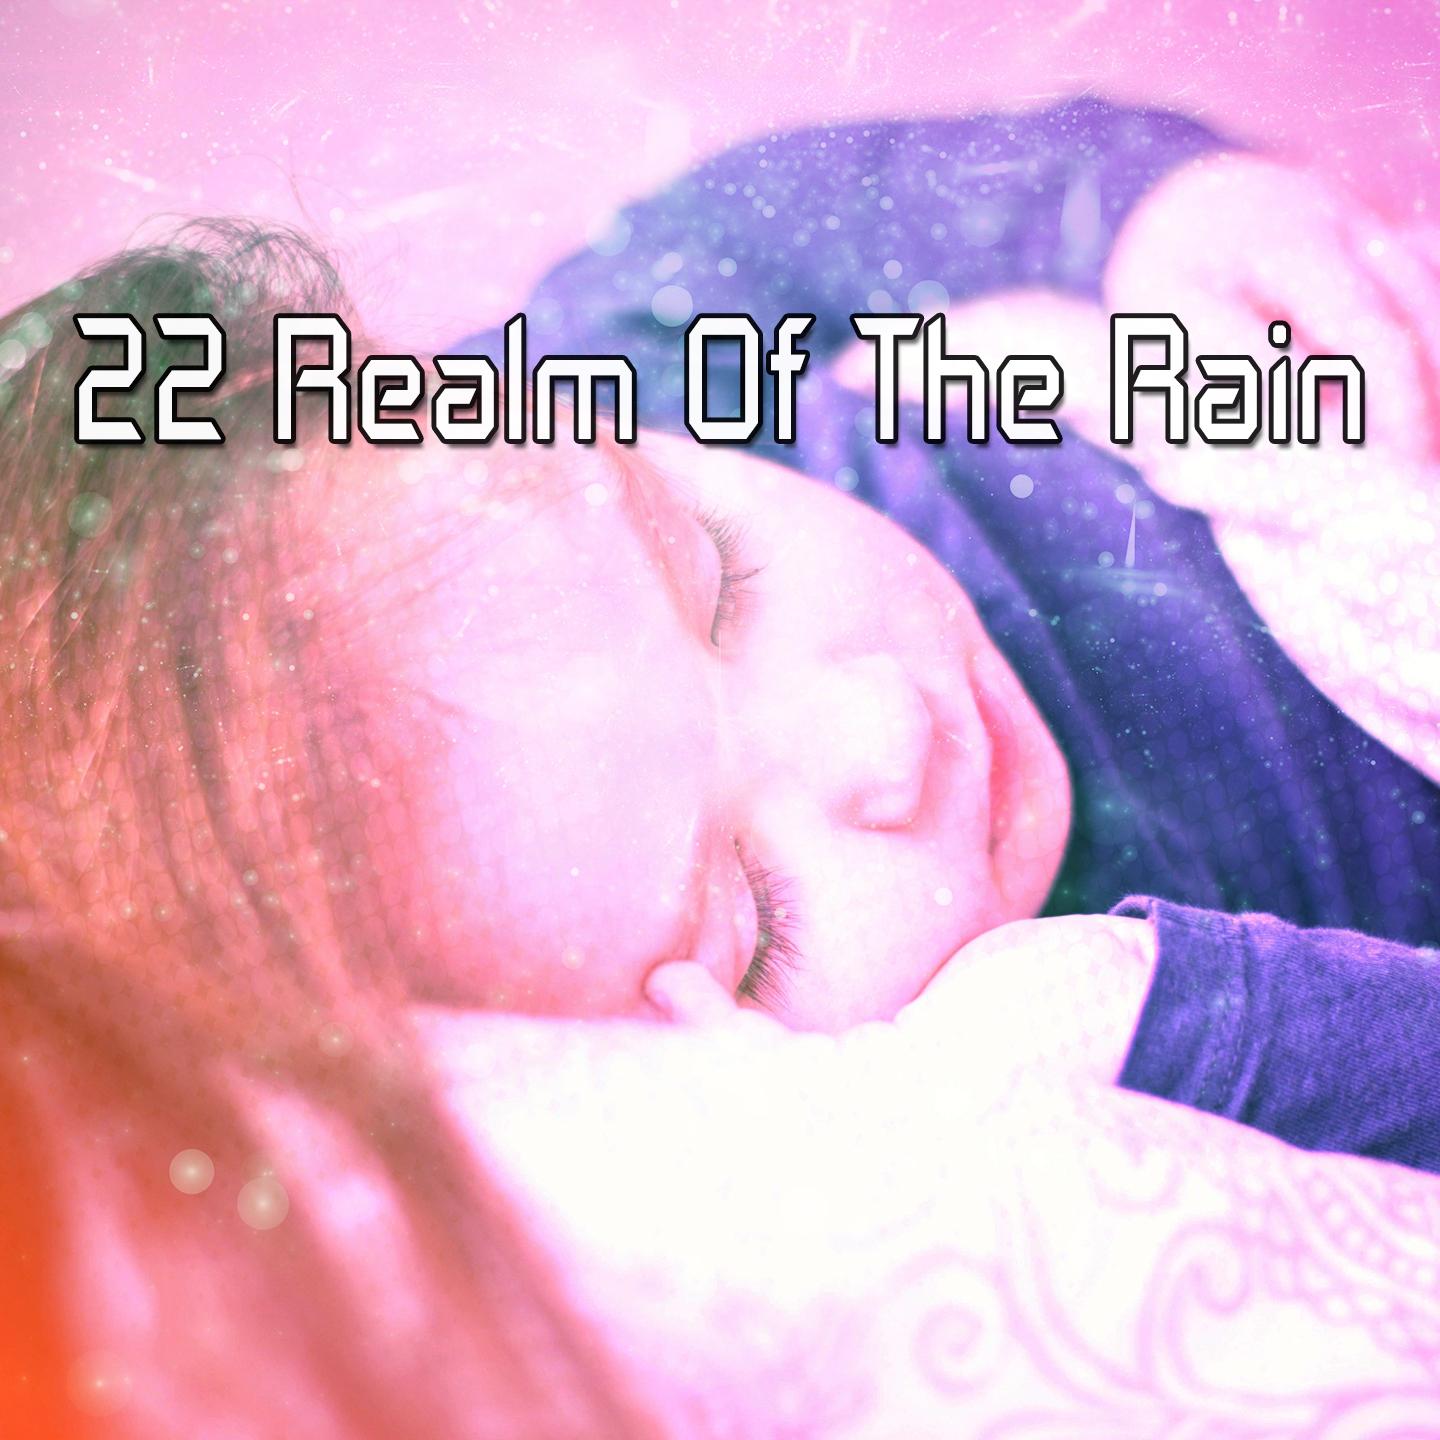 22 Realm Of The Rain